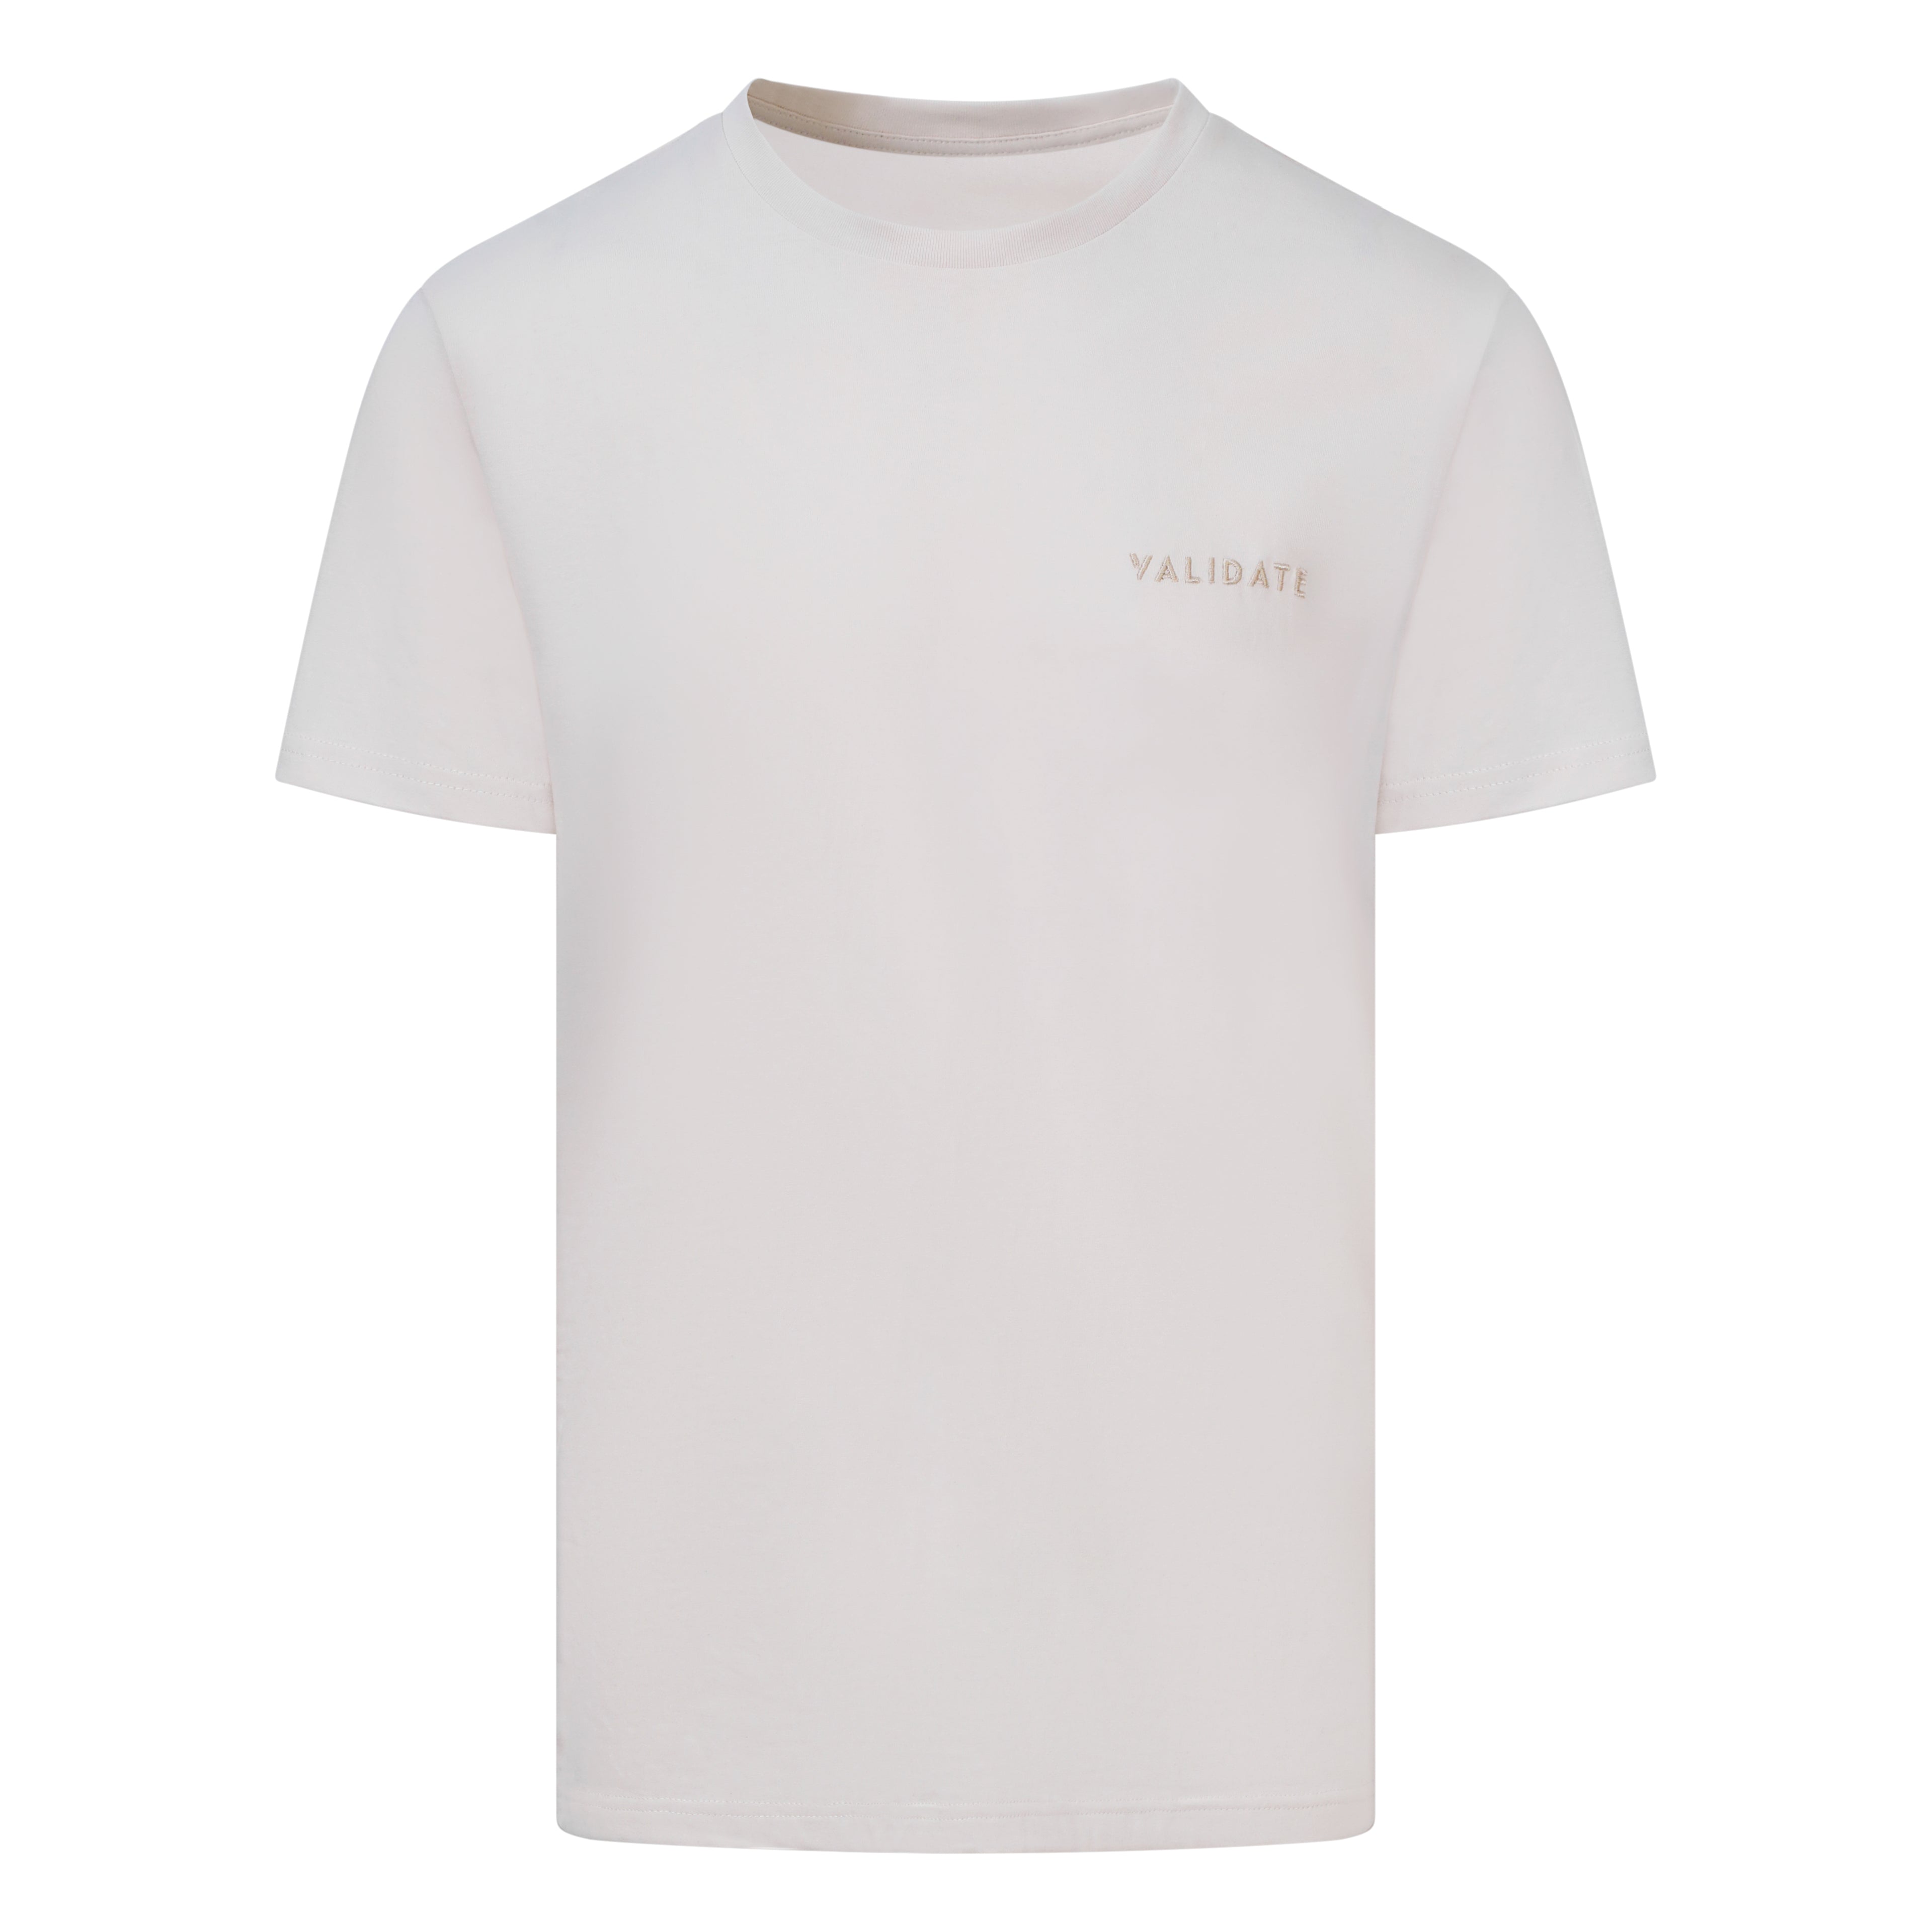 Validate Core Essential Men's T-Shirt Vintage White